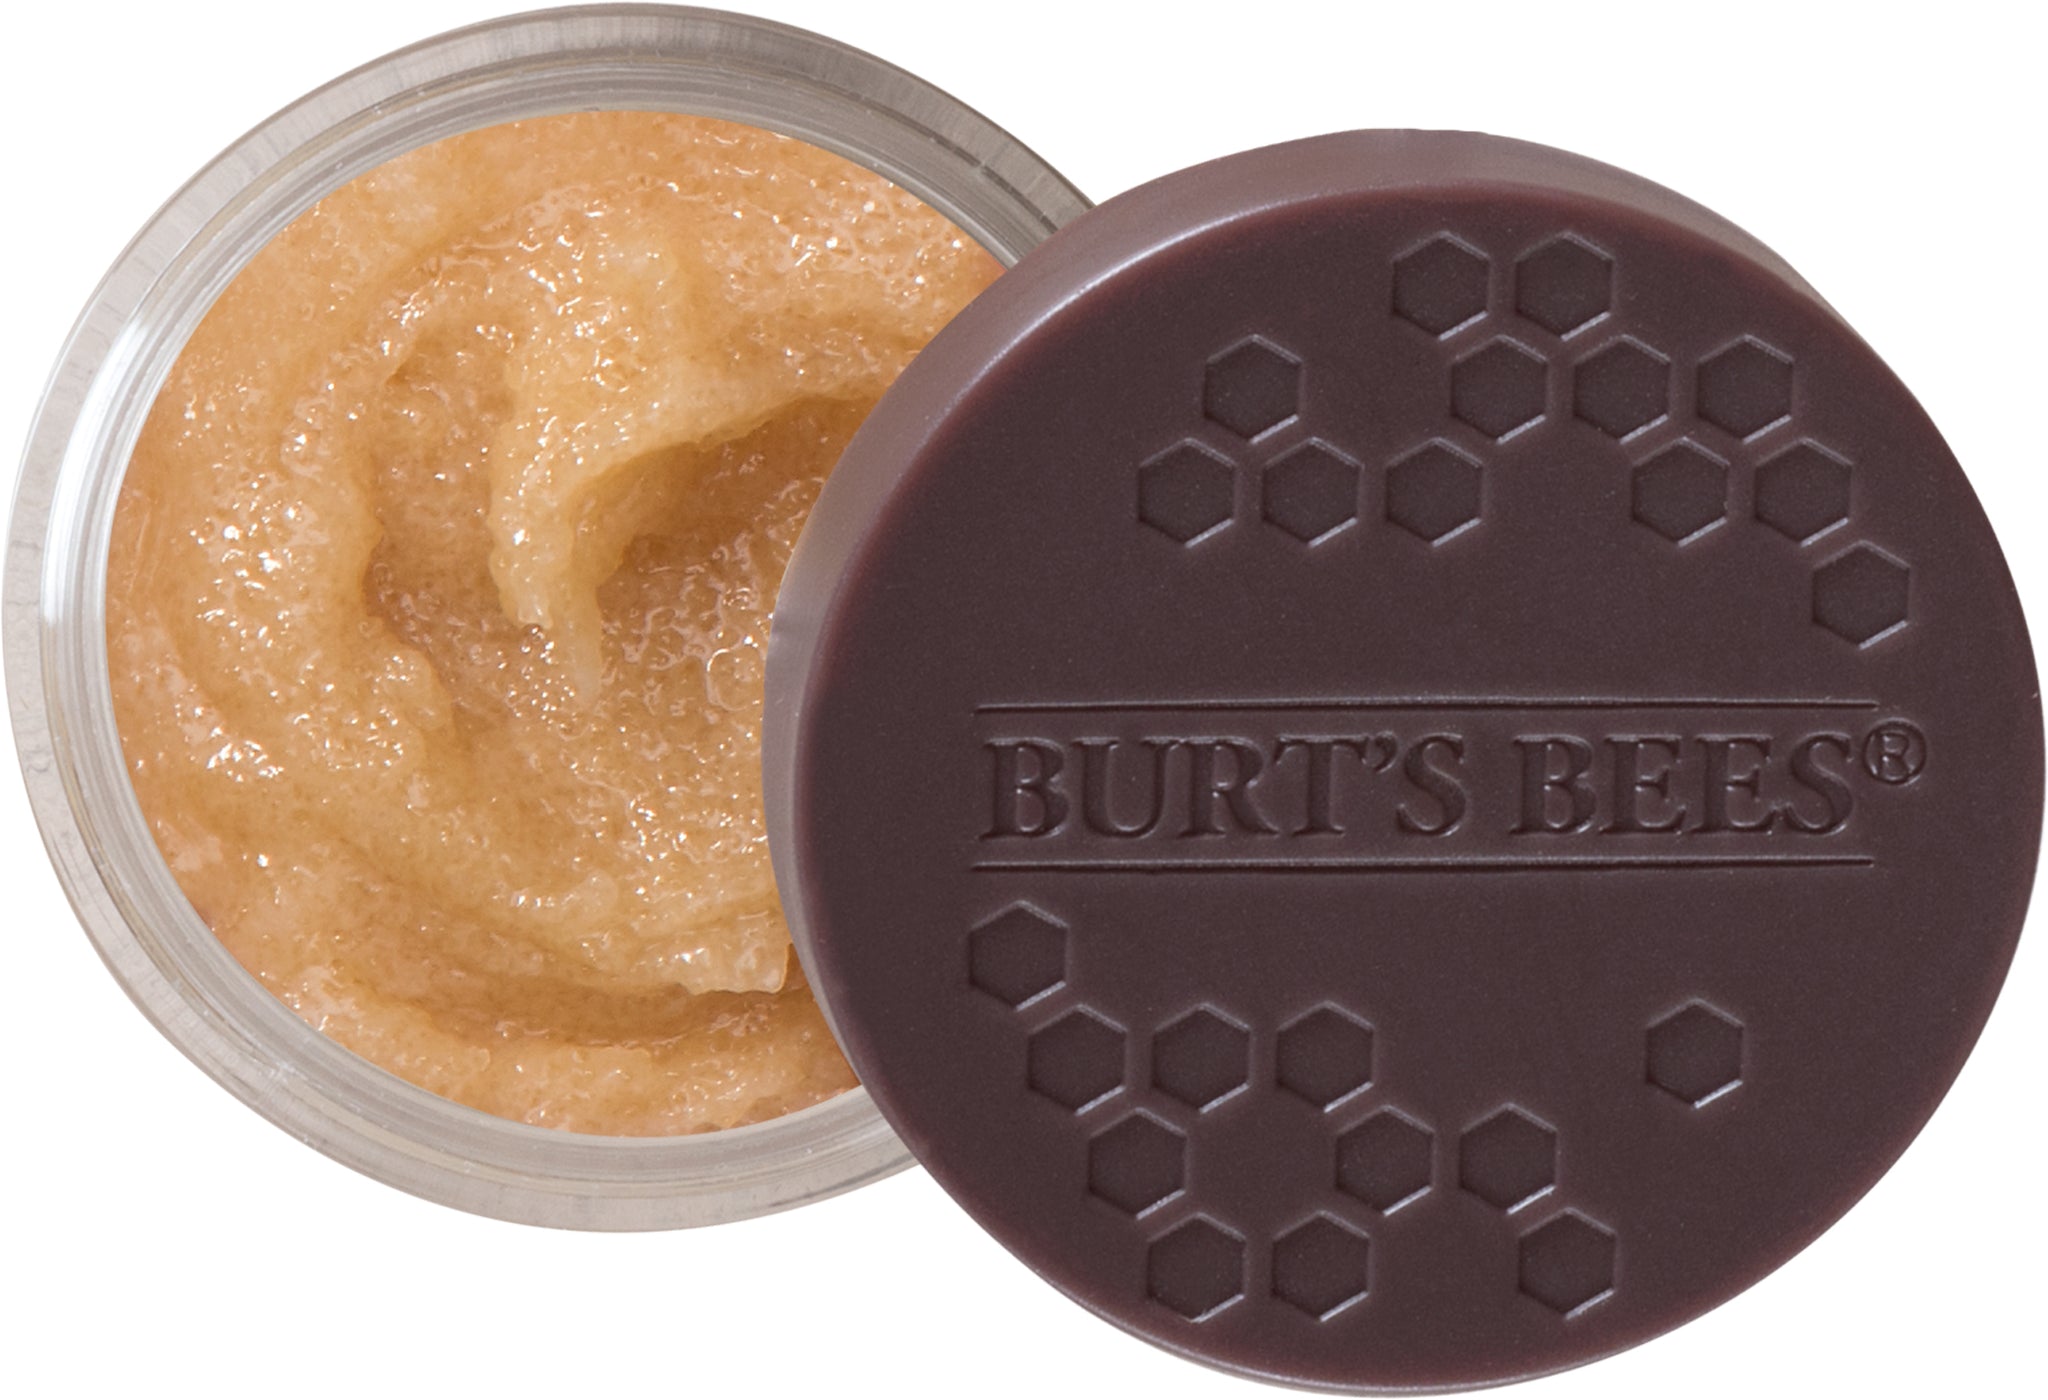 Burt's Bees Lip Scrub 7.08g